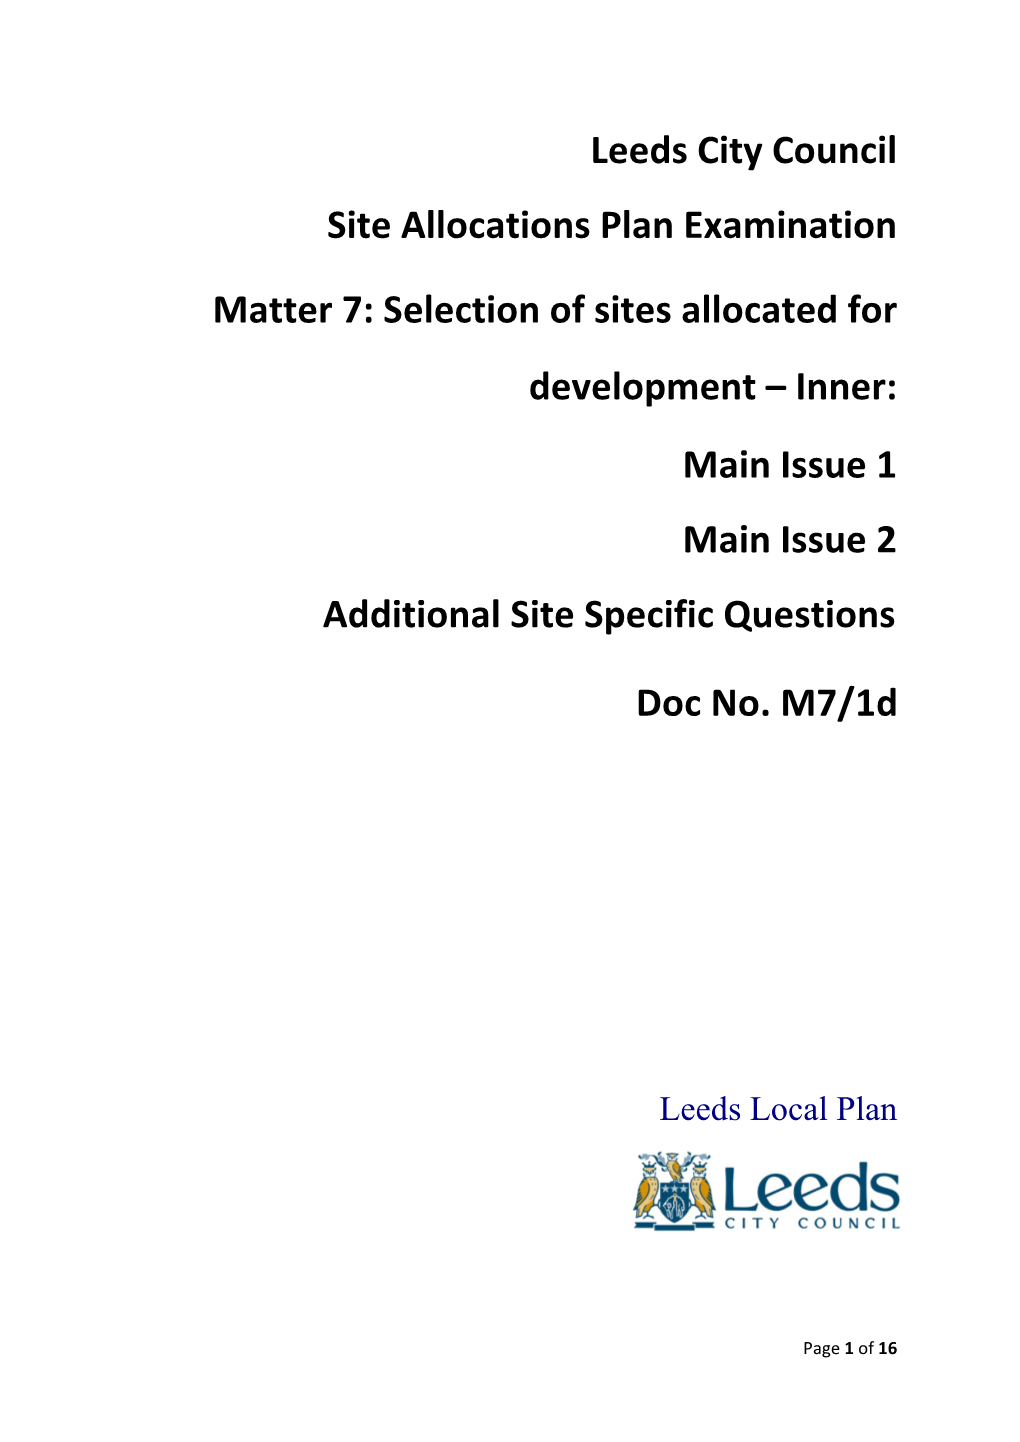 Leeds City Council Site Allocations Plan Examination Matter 7